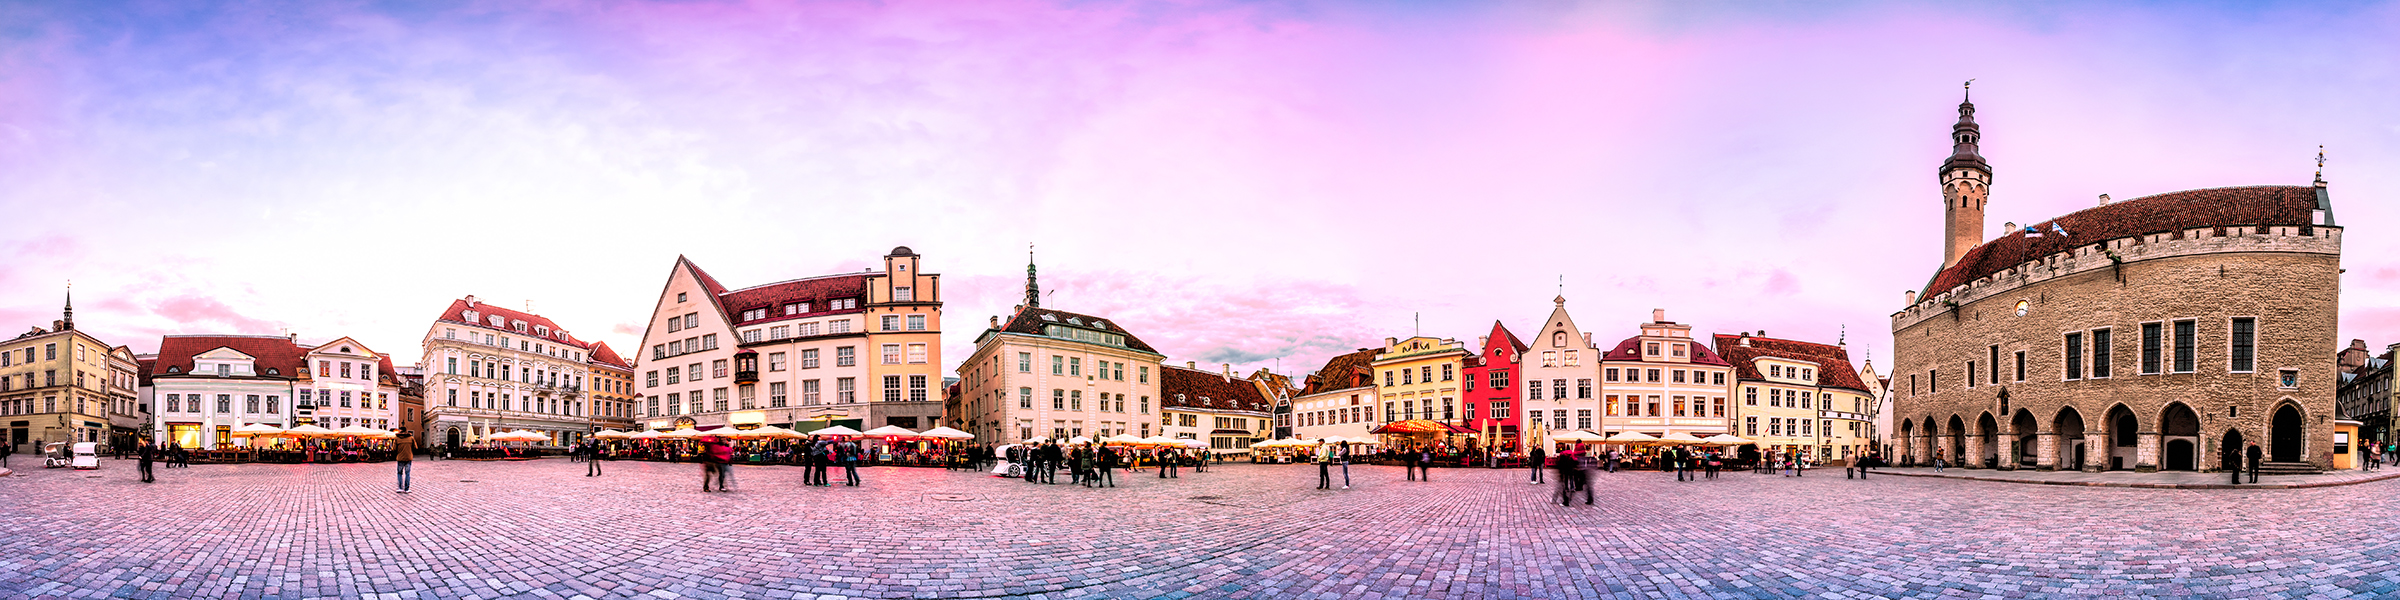 Estonia Tallinn Town Hall Square